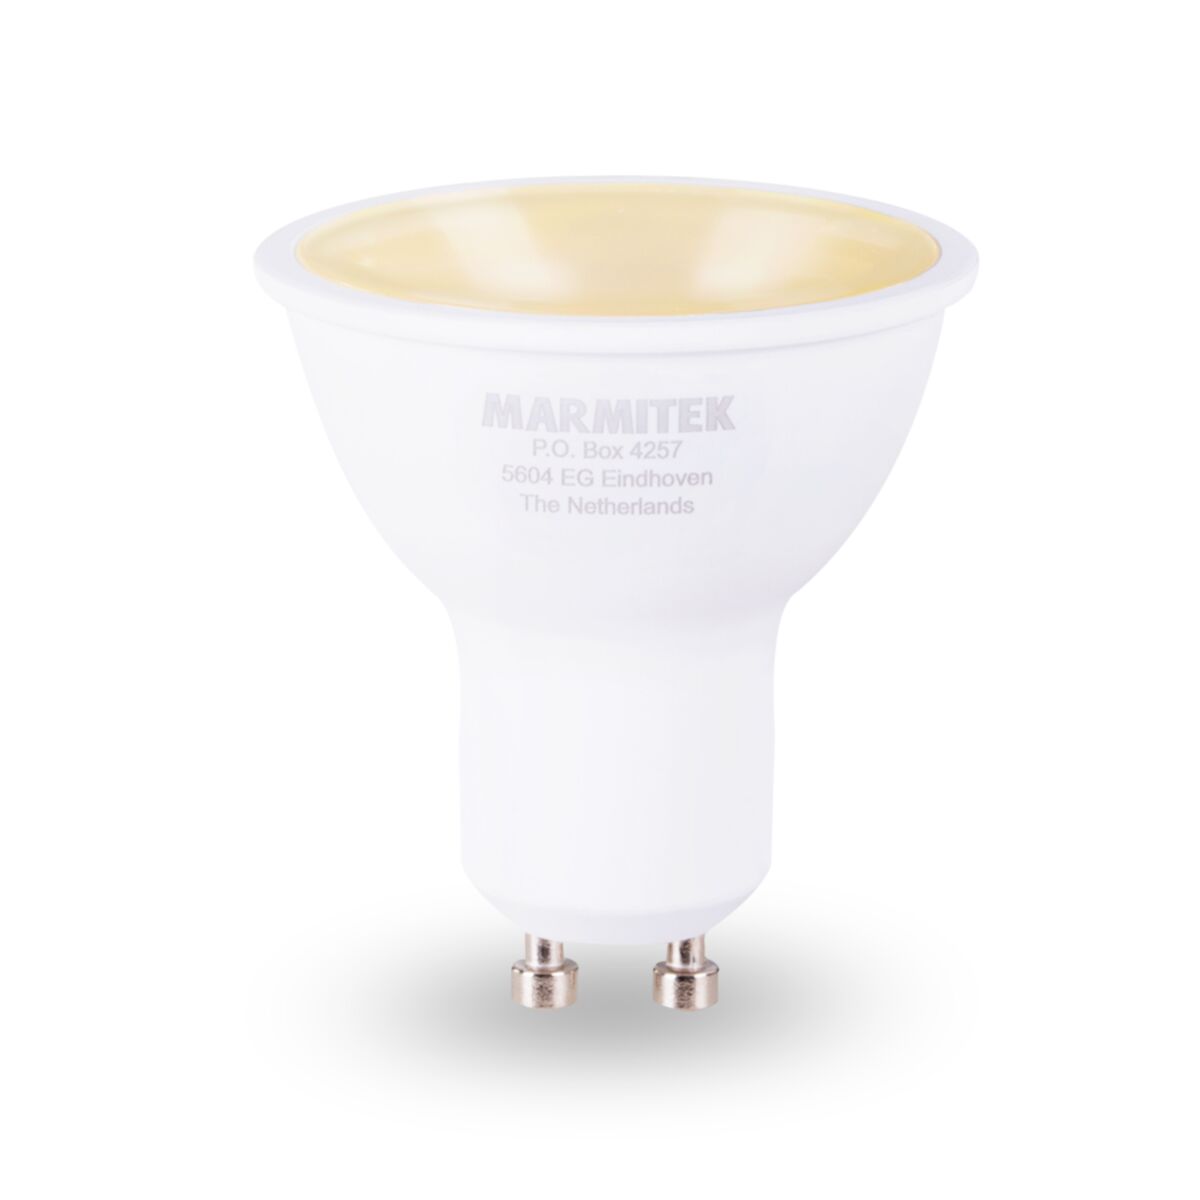 Glow XSE - Smart Lampe - GU10 - Steuerung per App - Weiβ